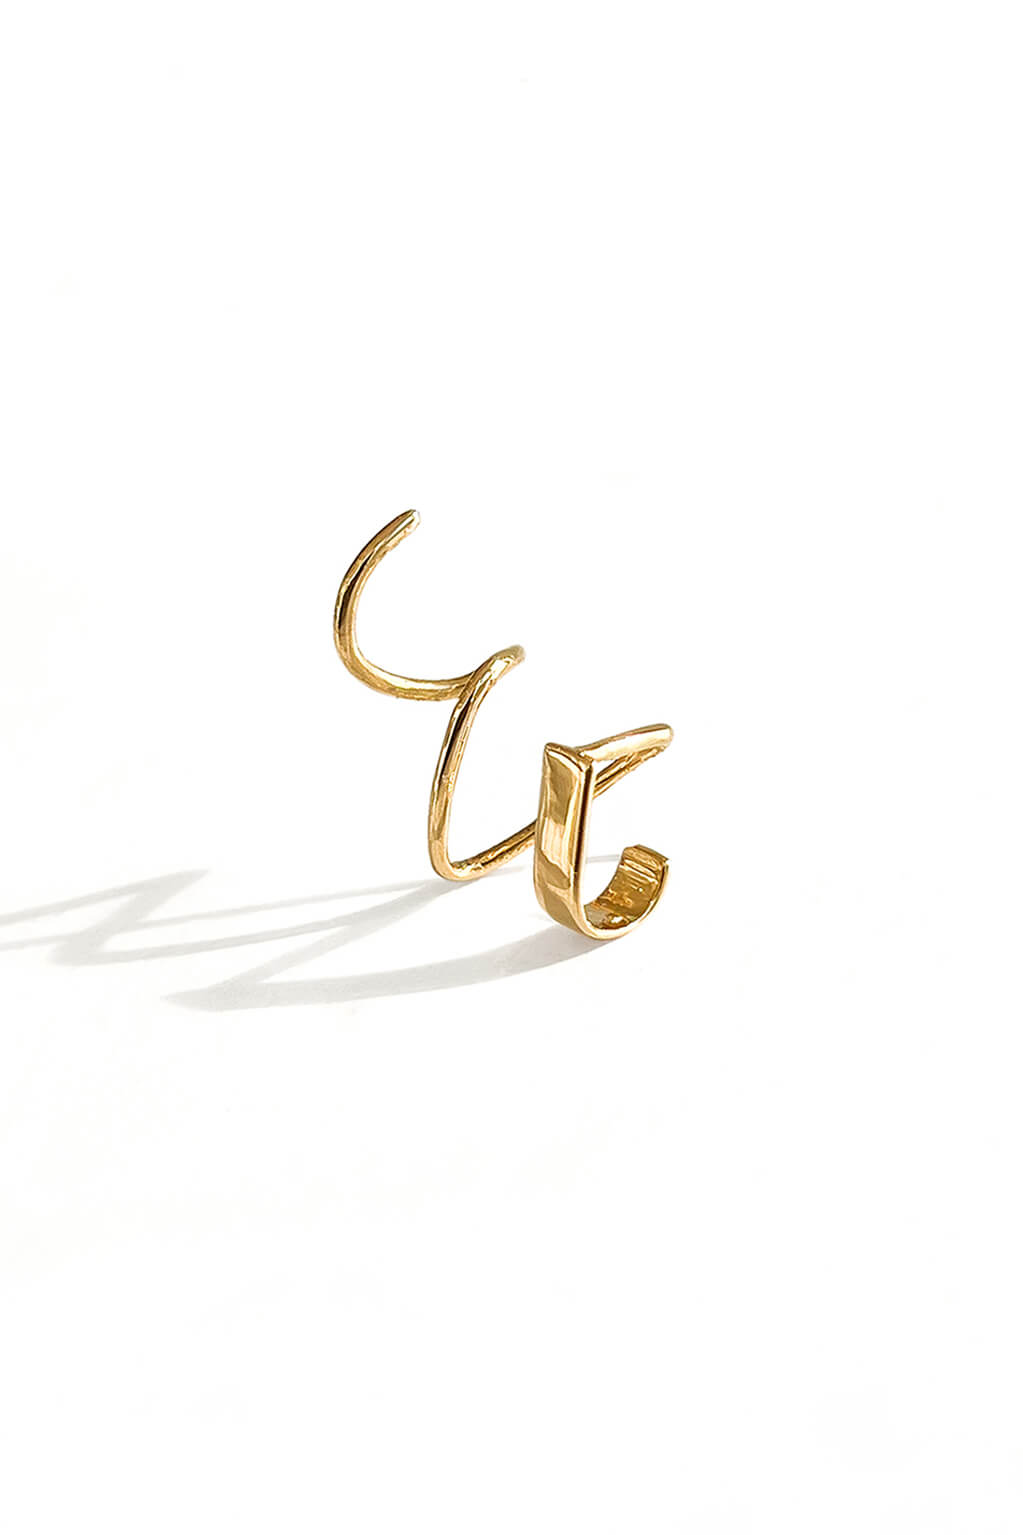 Double Snake gold earring